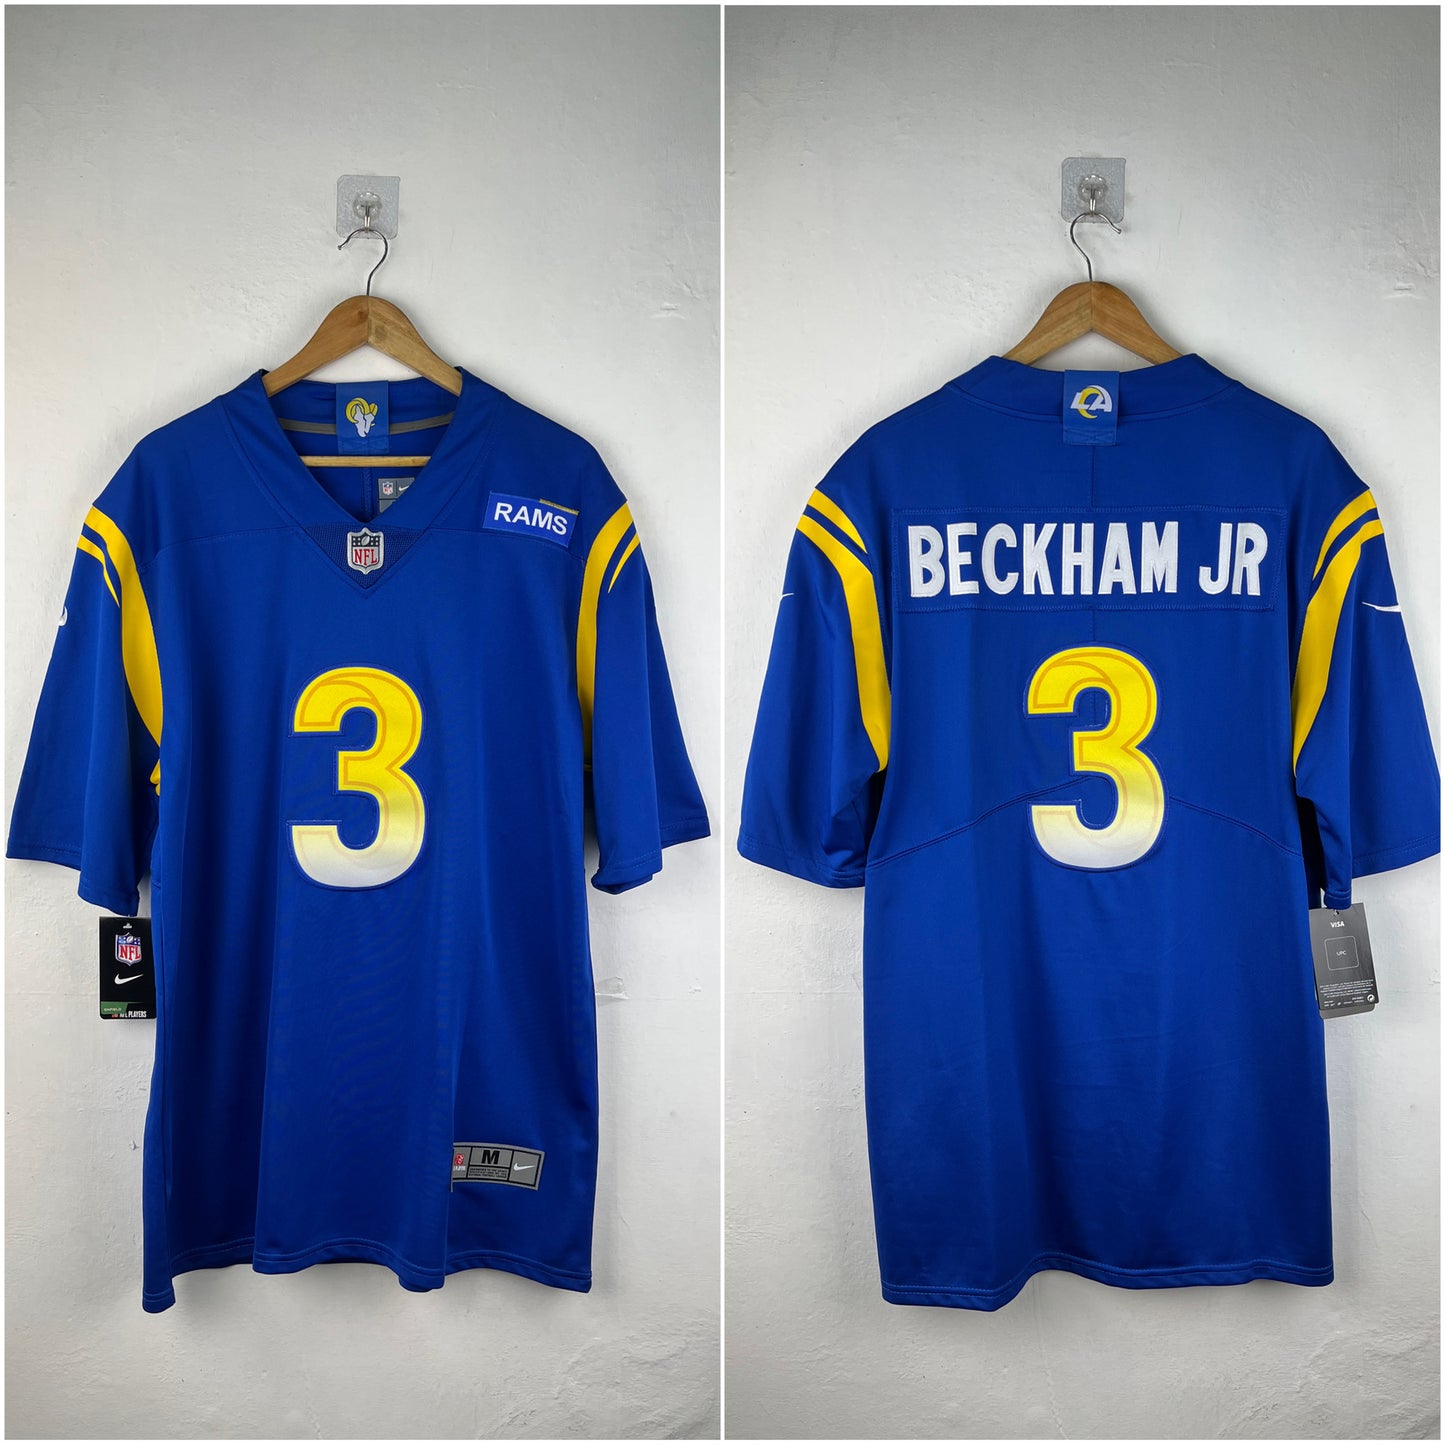 BECKHAM JR 13 Blue LA Rams NFL Jersey